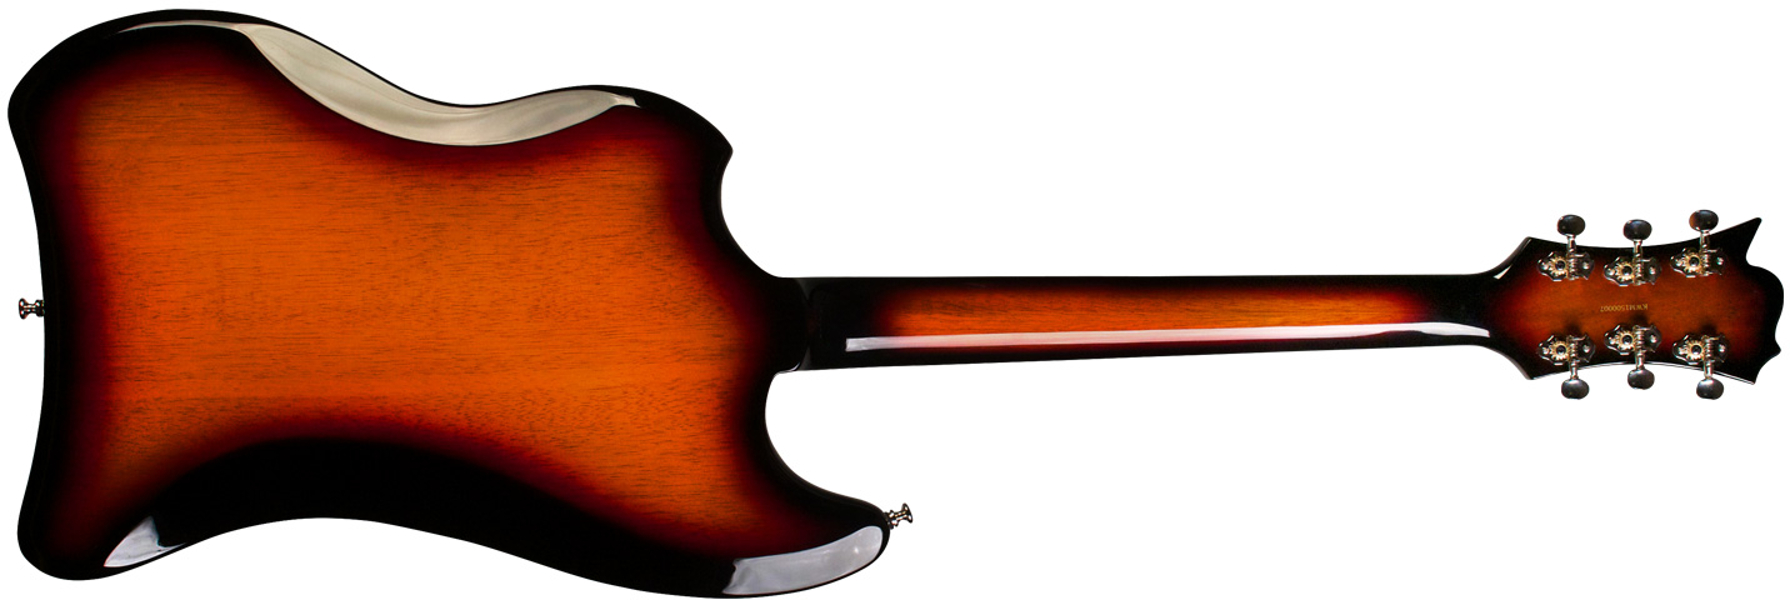 Guild S-200 T-bird - Antique Burst - Retro-rock elektrische gitaar - Variation 2